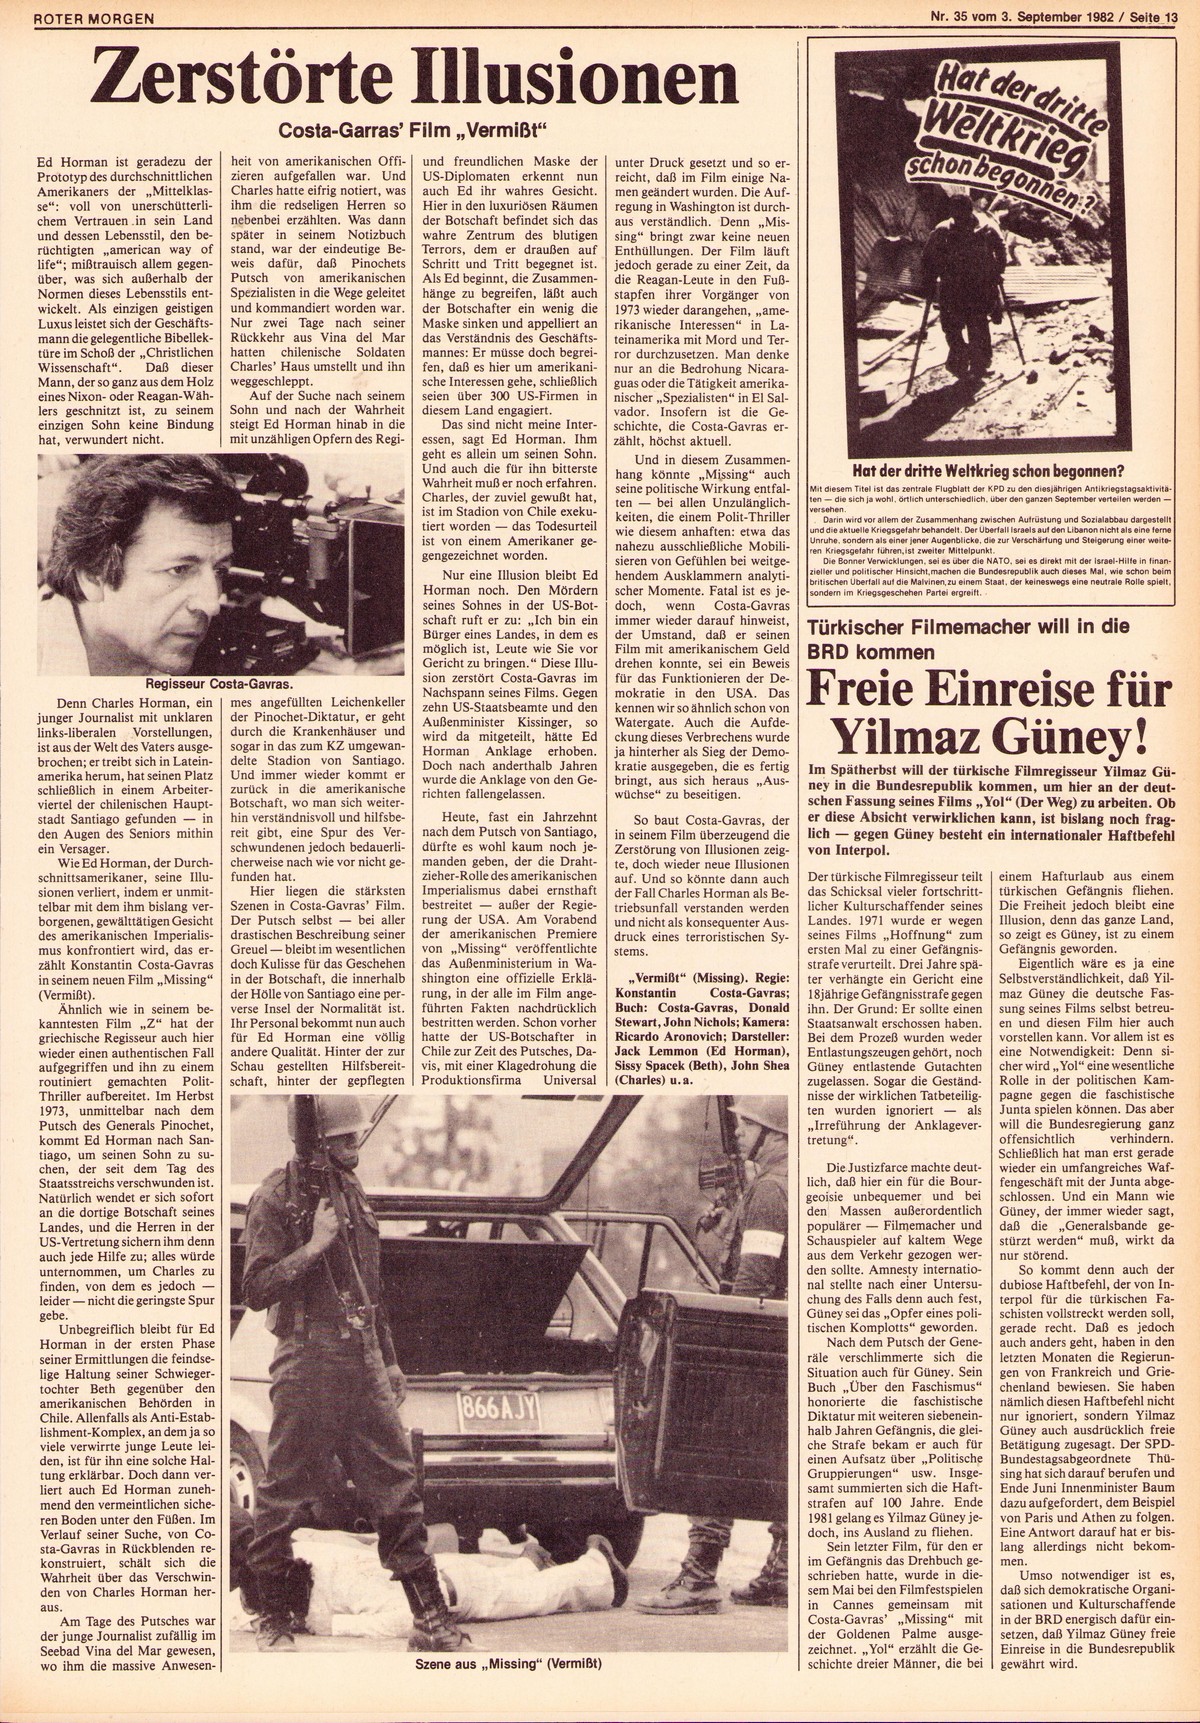 Roter Morgen, 16. Jg., 3. September 1982, Nr. 35, Seite 13